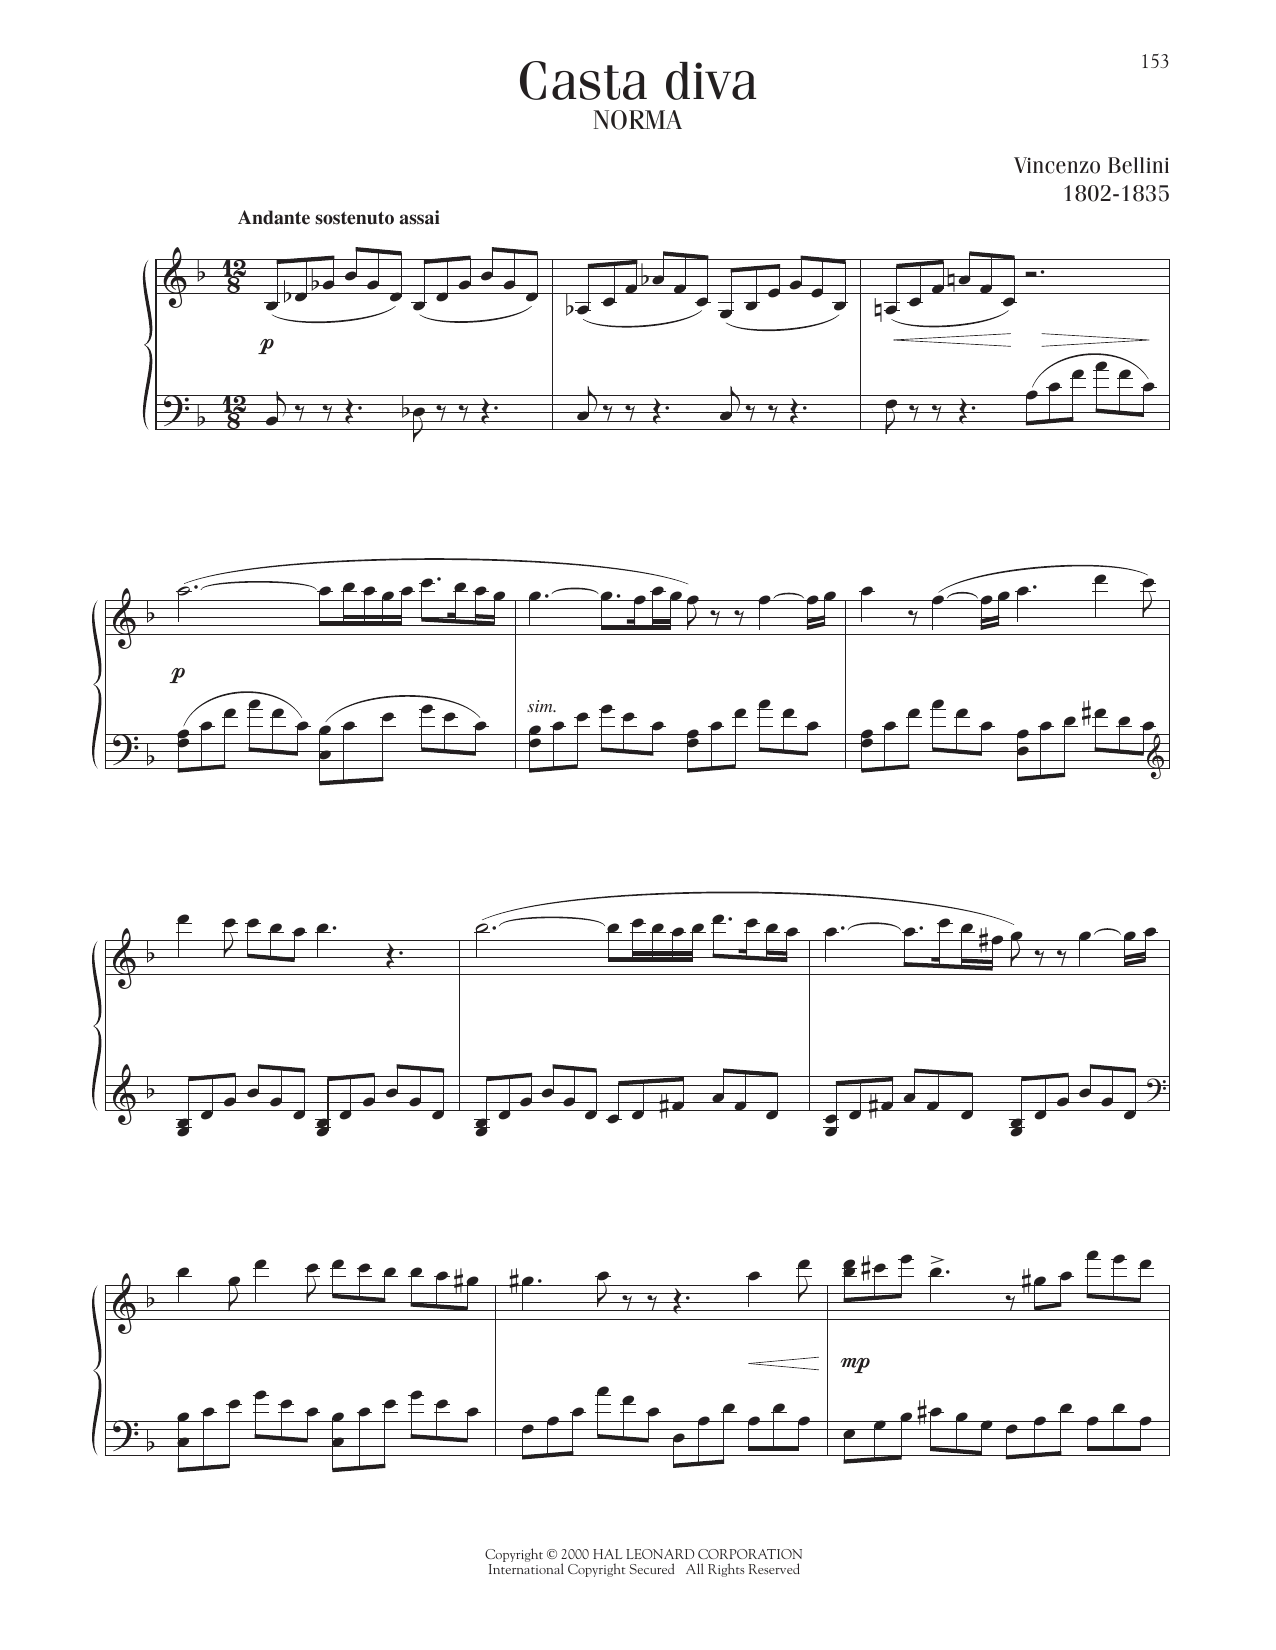 Vincenzo Bellini Casta Diva sheet music notes printable PDF score